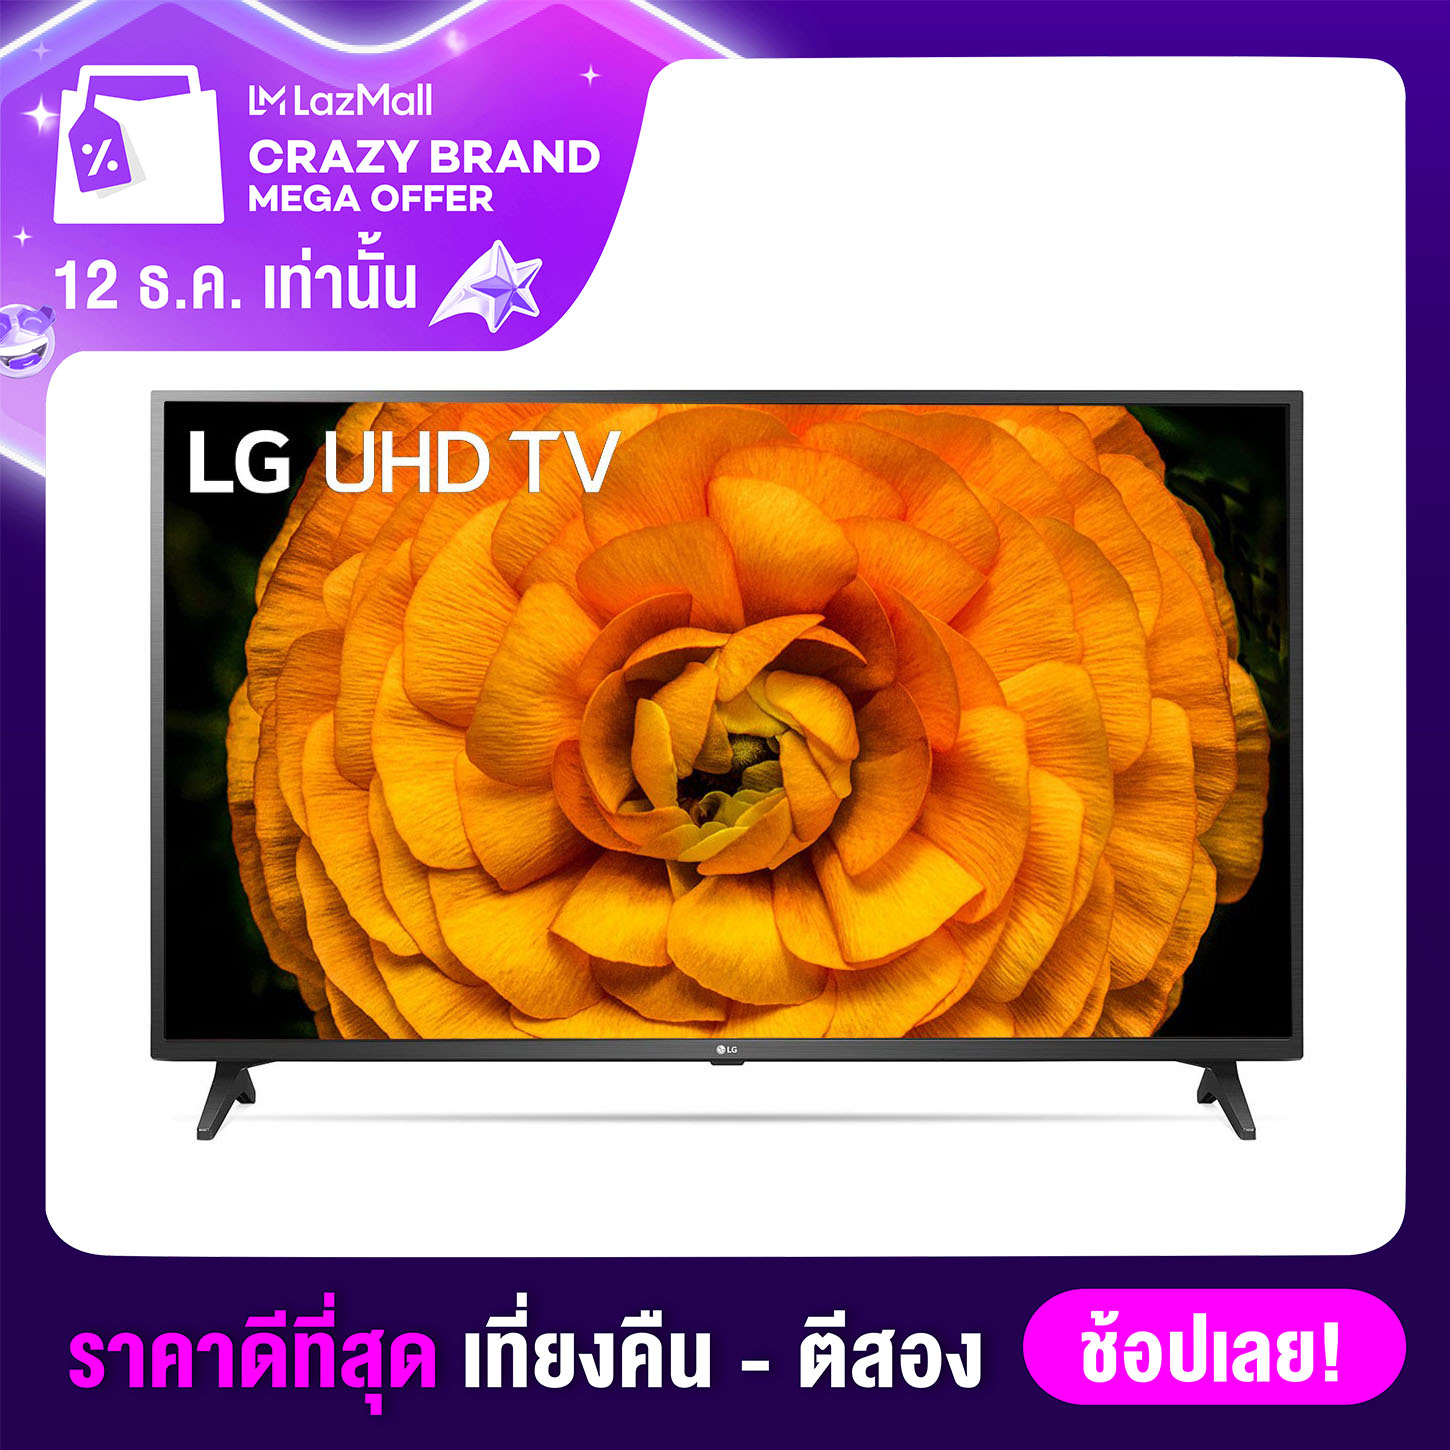 (NEW 2020) LG 4K SMART TV 55" รุ่น 55UN7200 Bluetooth Surround Ready
Airplay2 & Homekit ThinQ AI Ultra Surround Netflix (ทีวี 55 นิ้ว Smart TV)